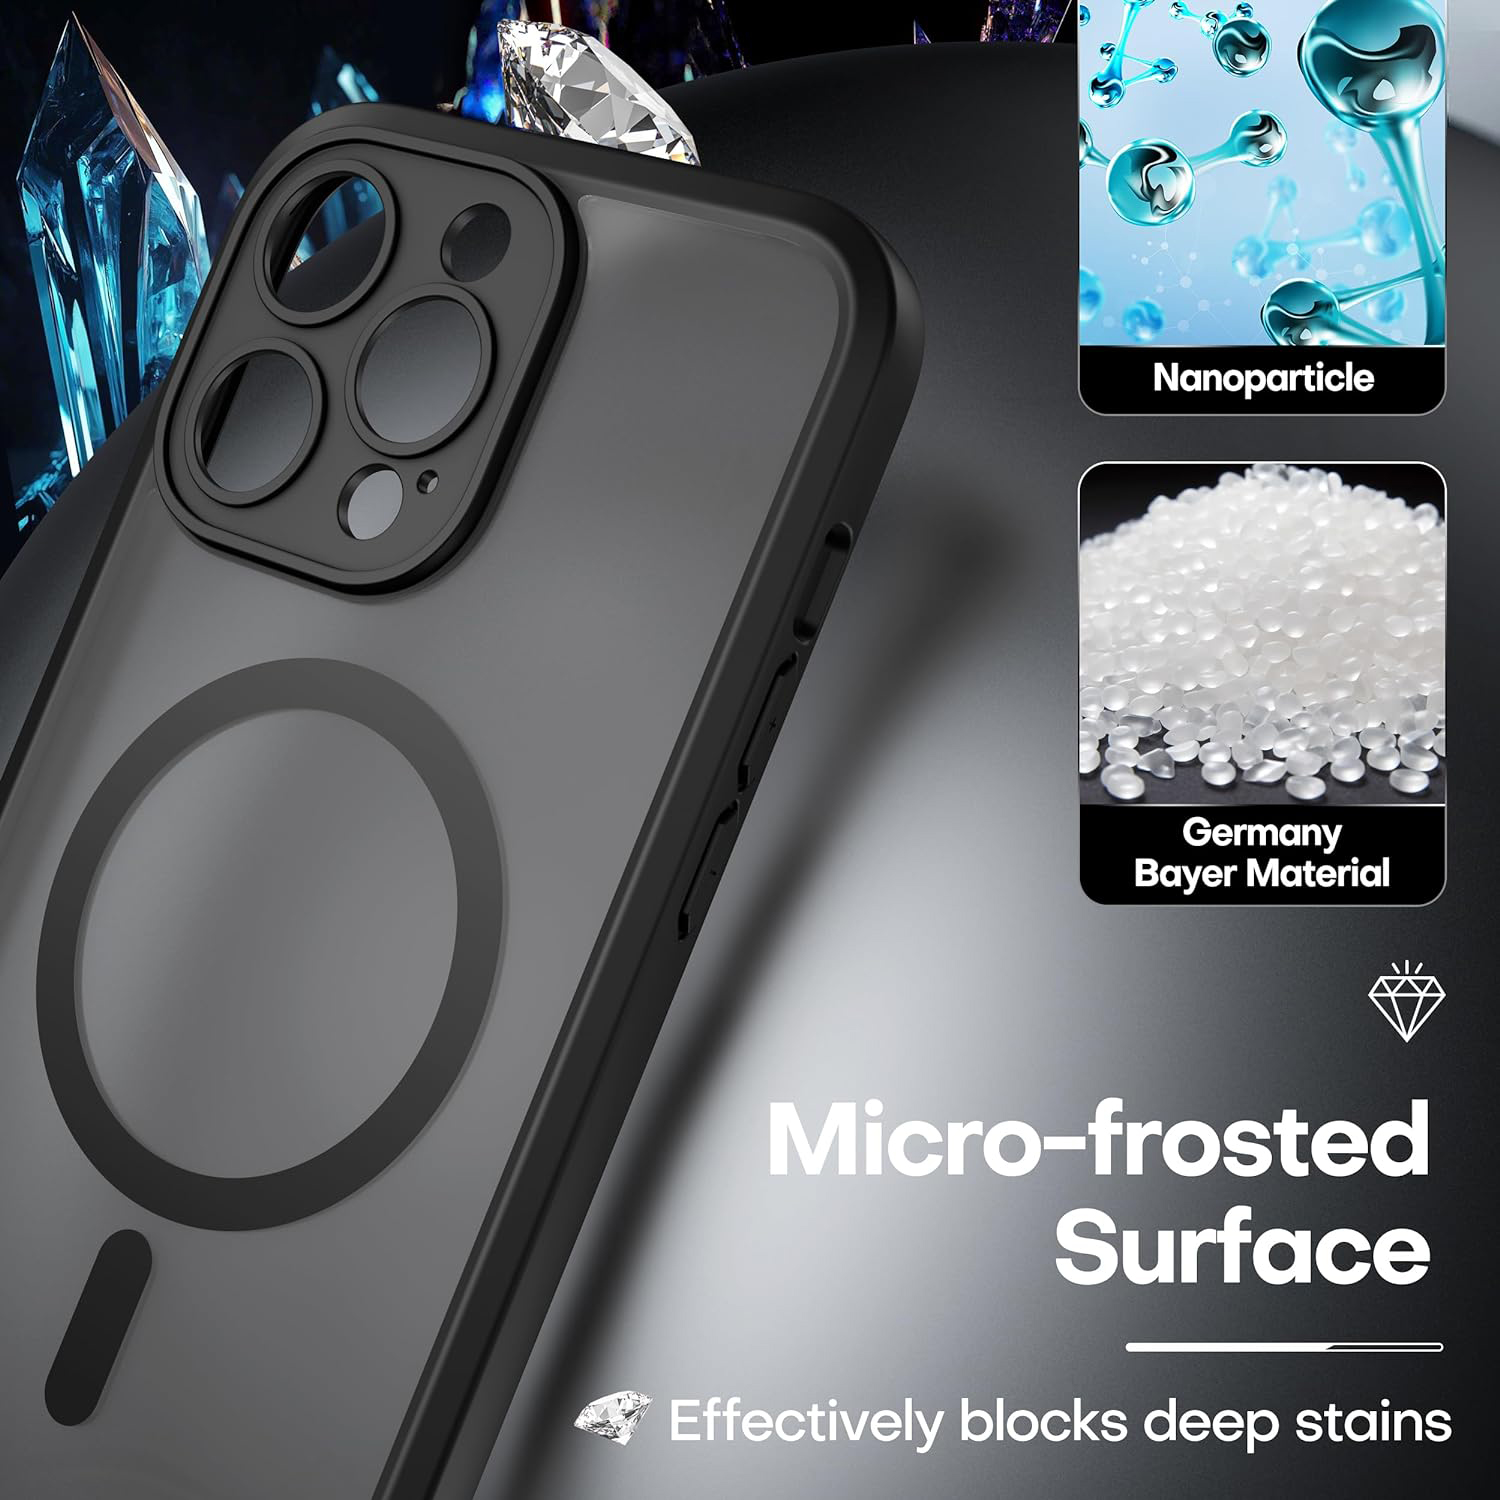 iPhone 15 MagSafe silikonskal i svart färg